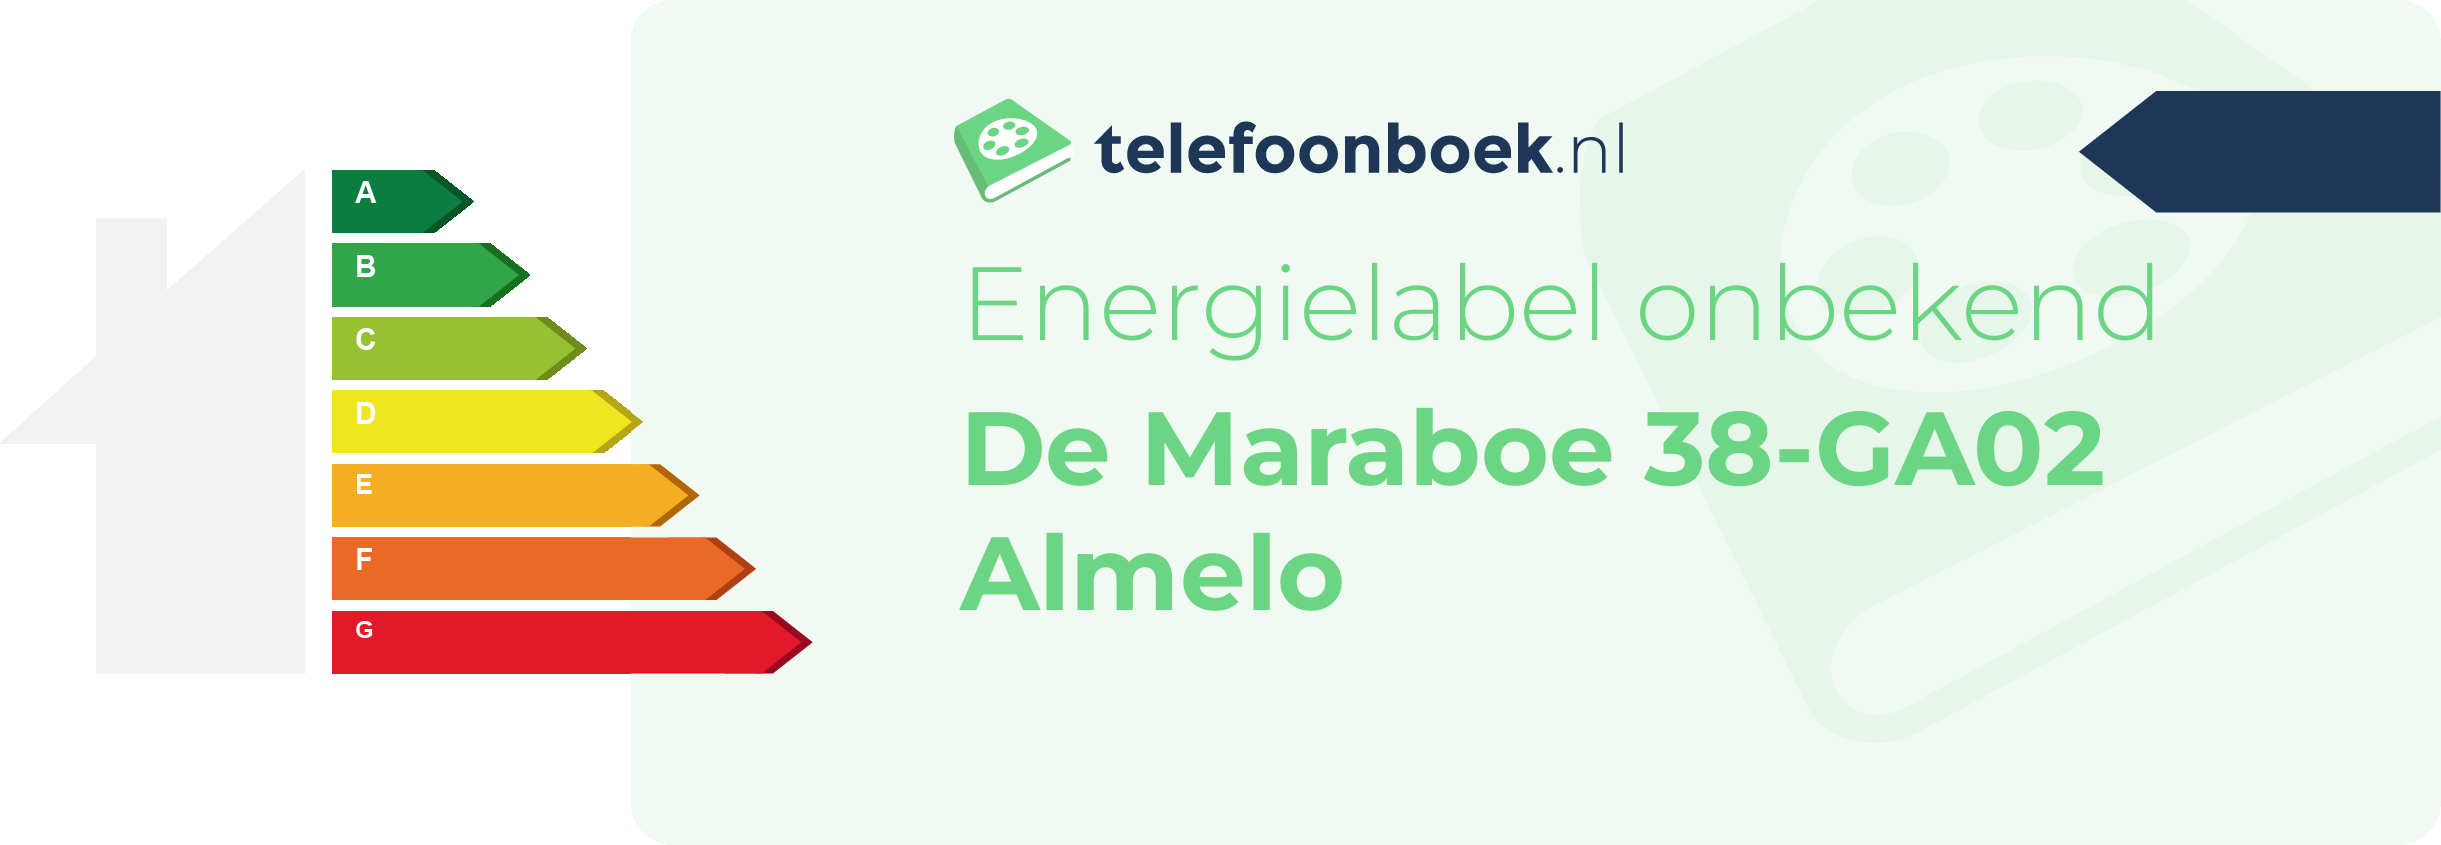 Energielabel De Maraboe 38-GA02 Almelo